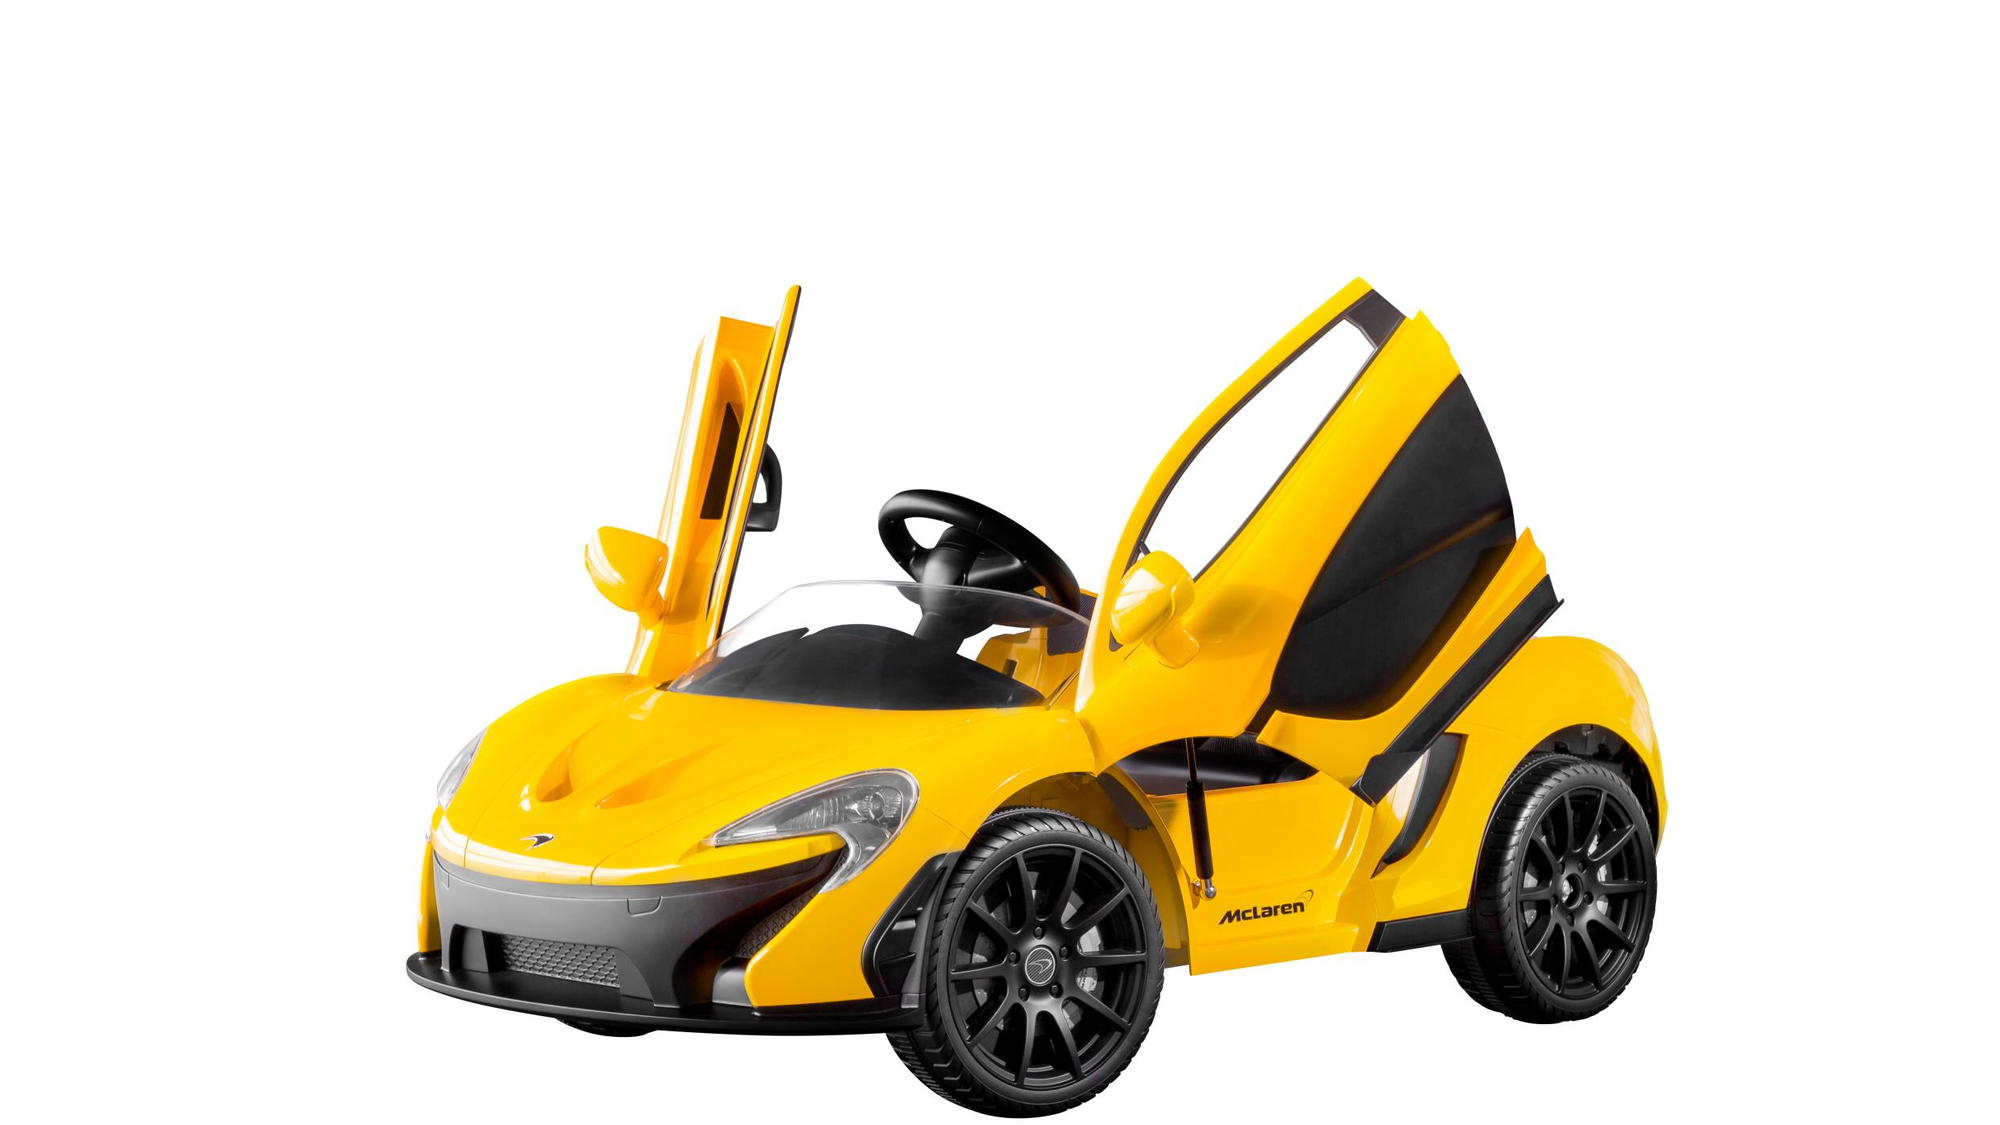 McLaren P1 Toy Car